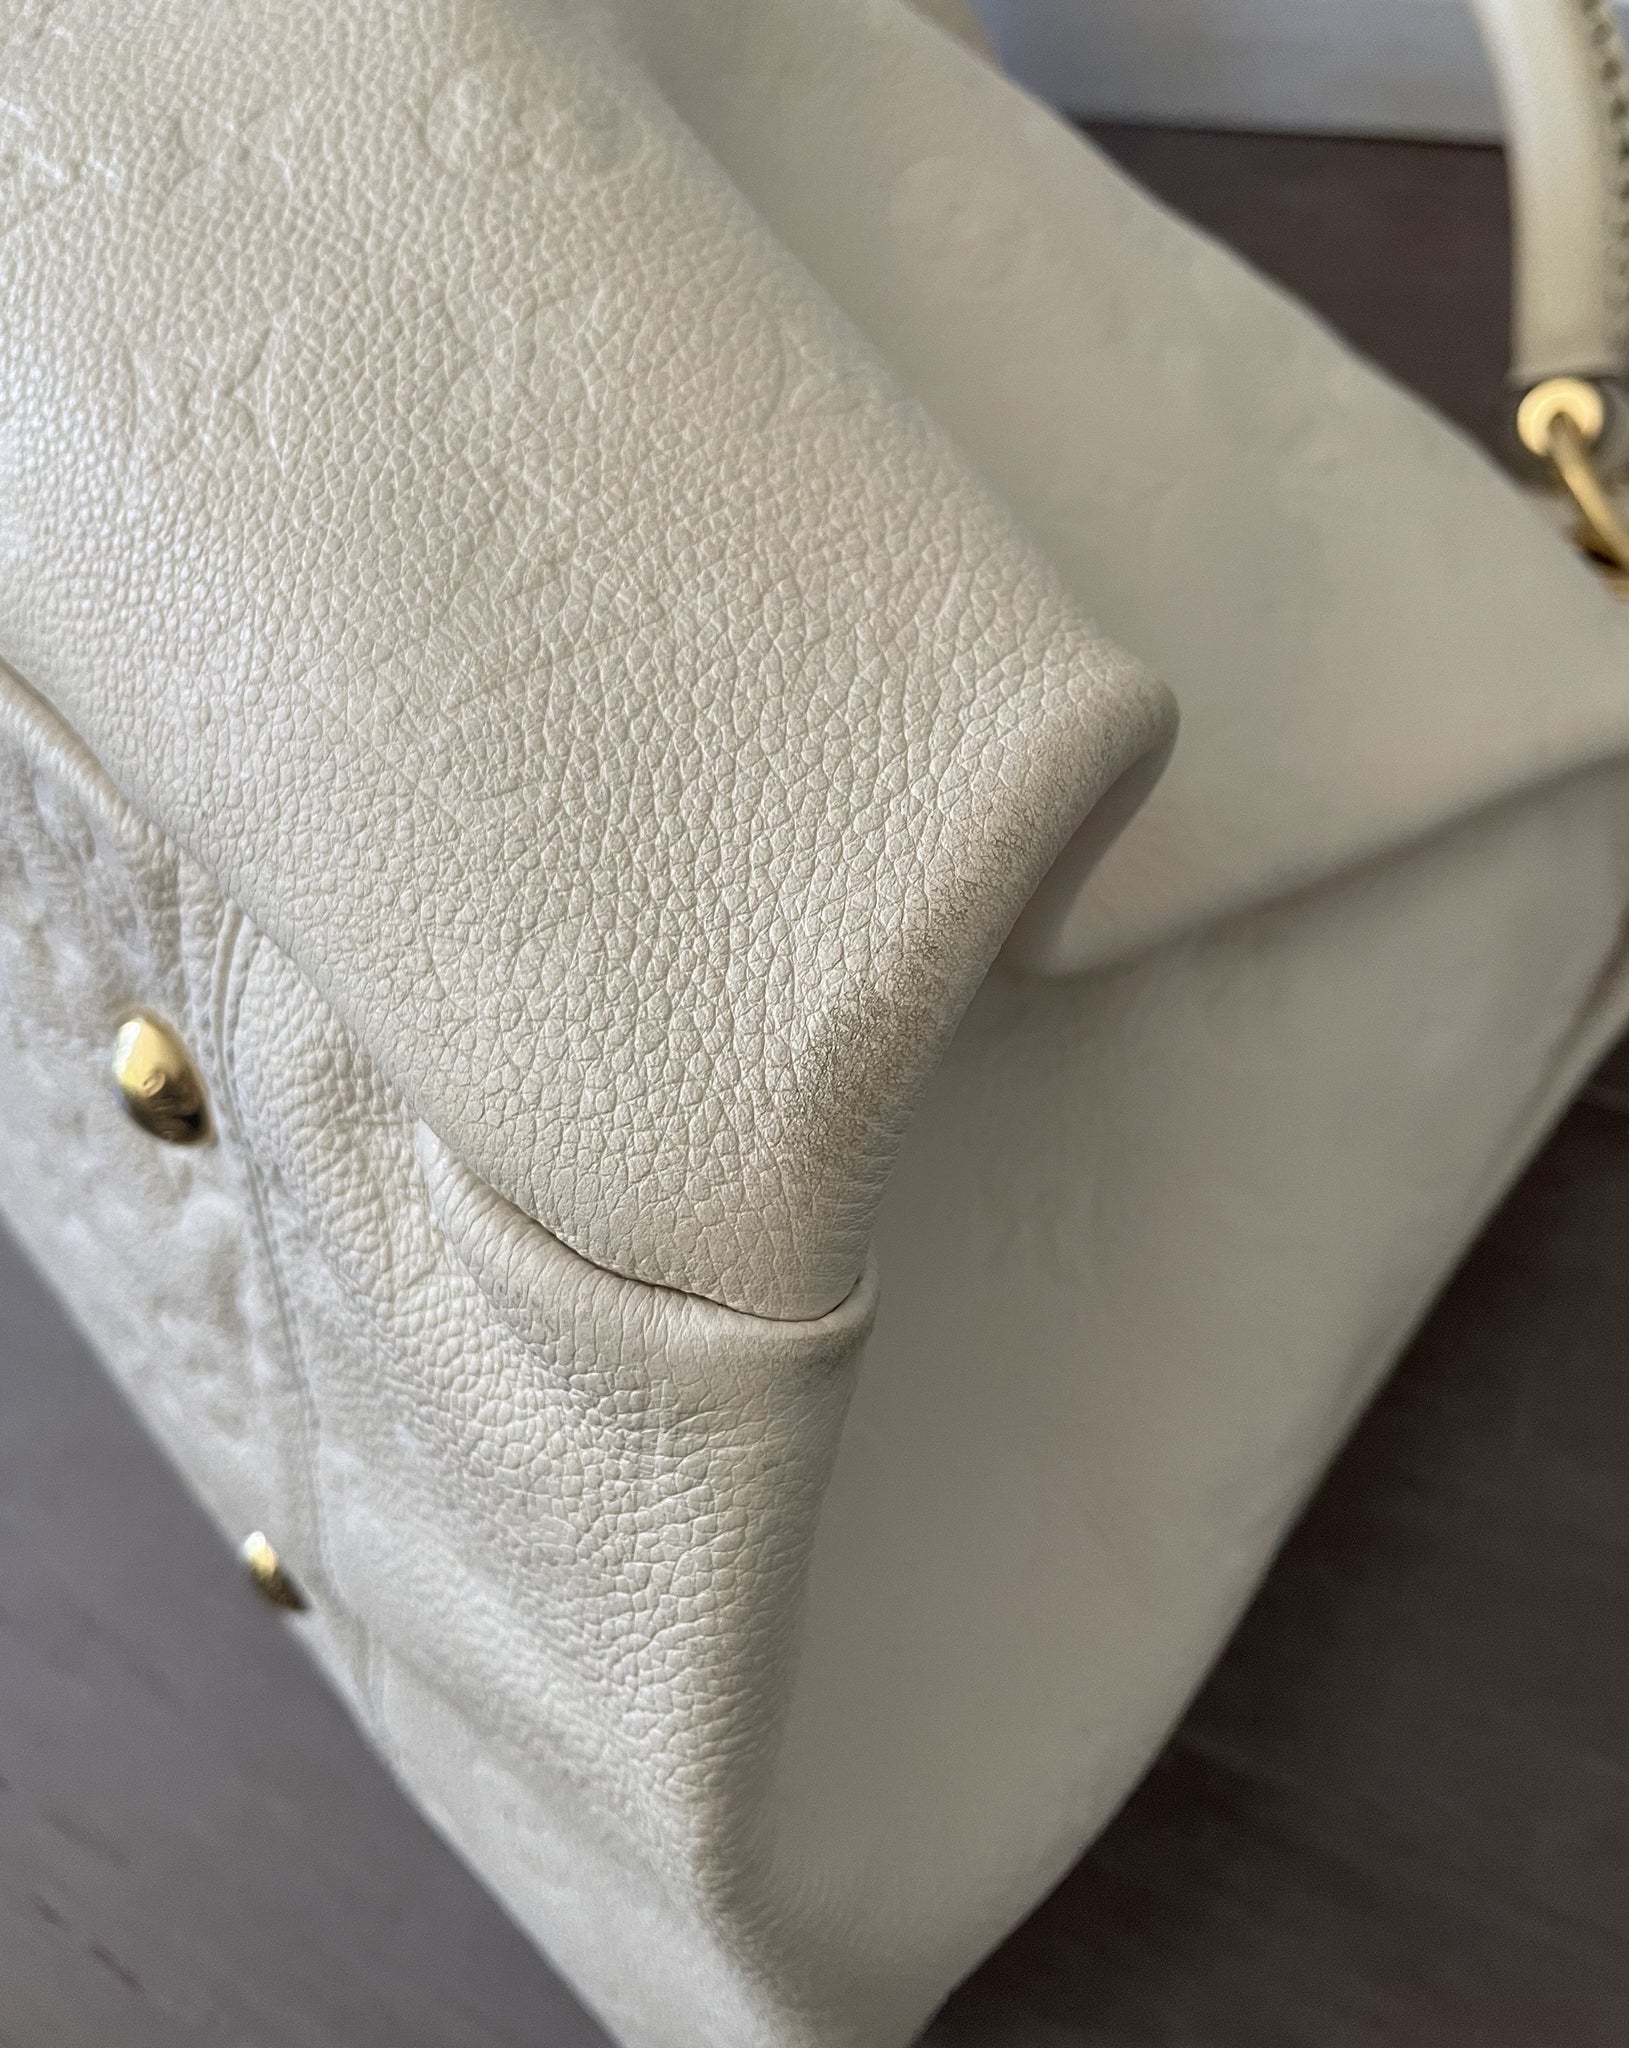 Louis Vuitton, Artsy shoulder bag in empreinte leather Cream ref